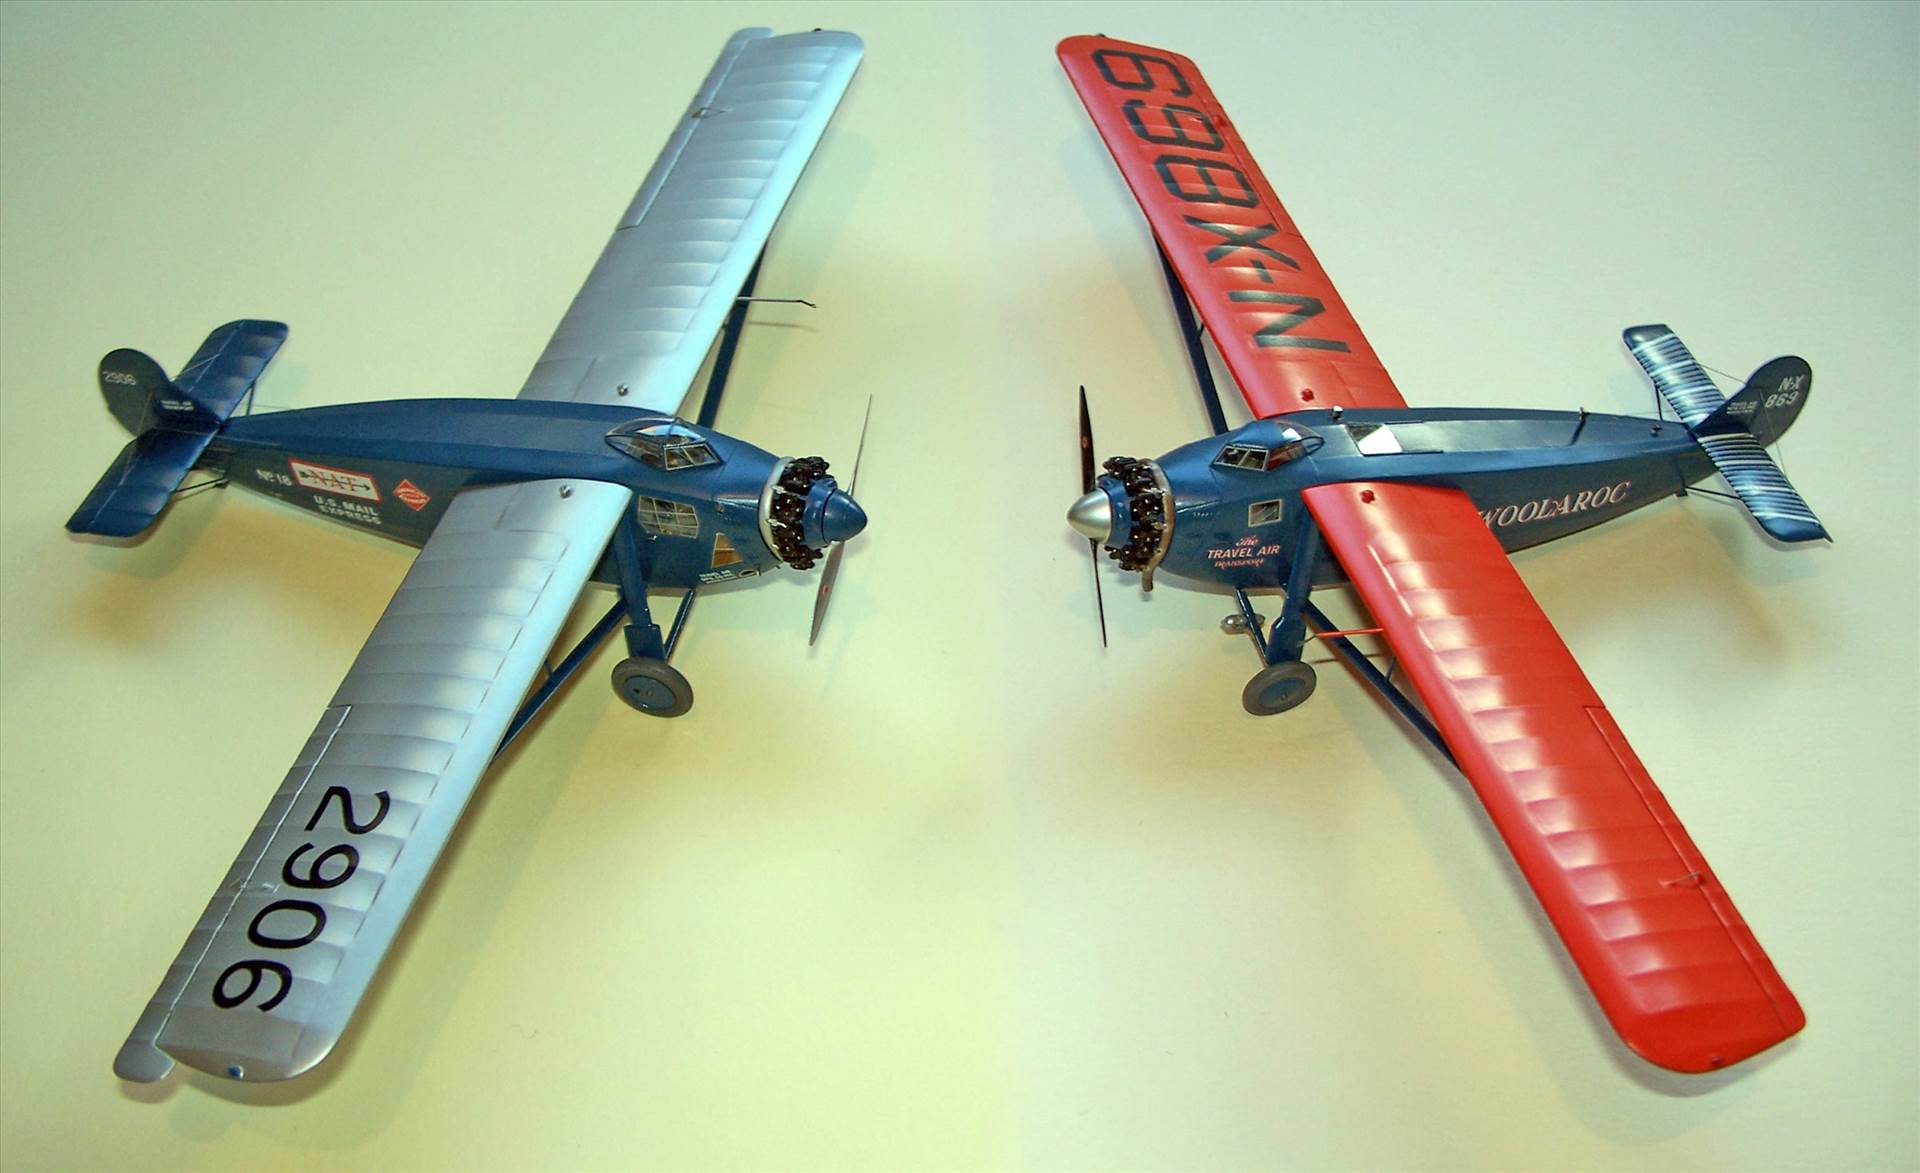 Travel Air 5000 model comparison_1.jpg  by Rogerhold